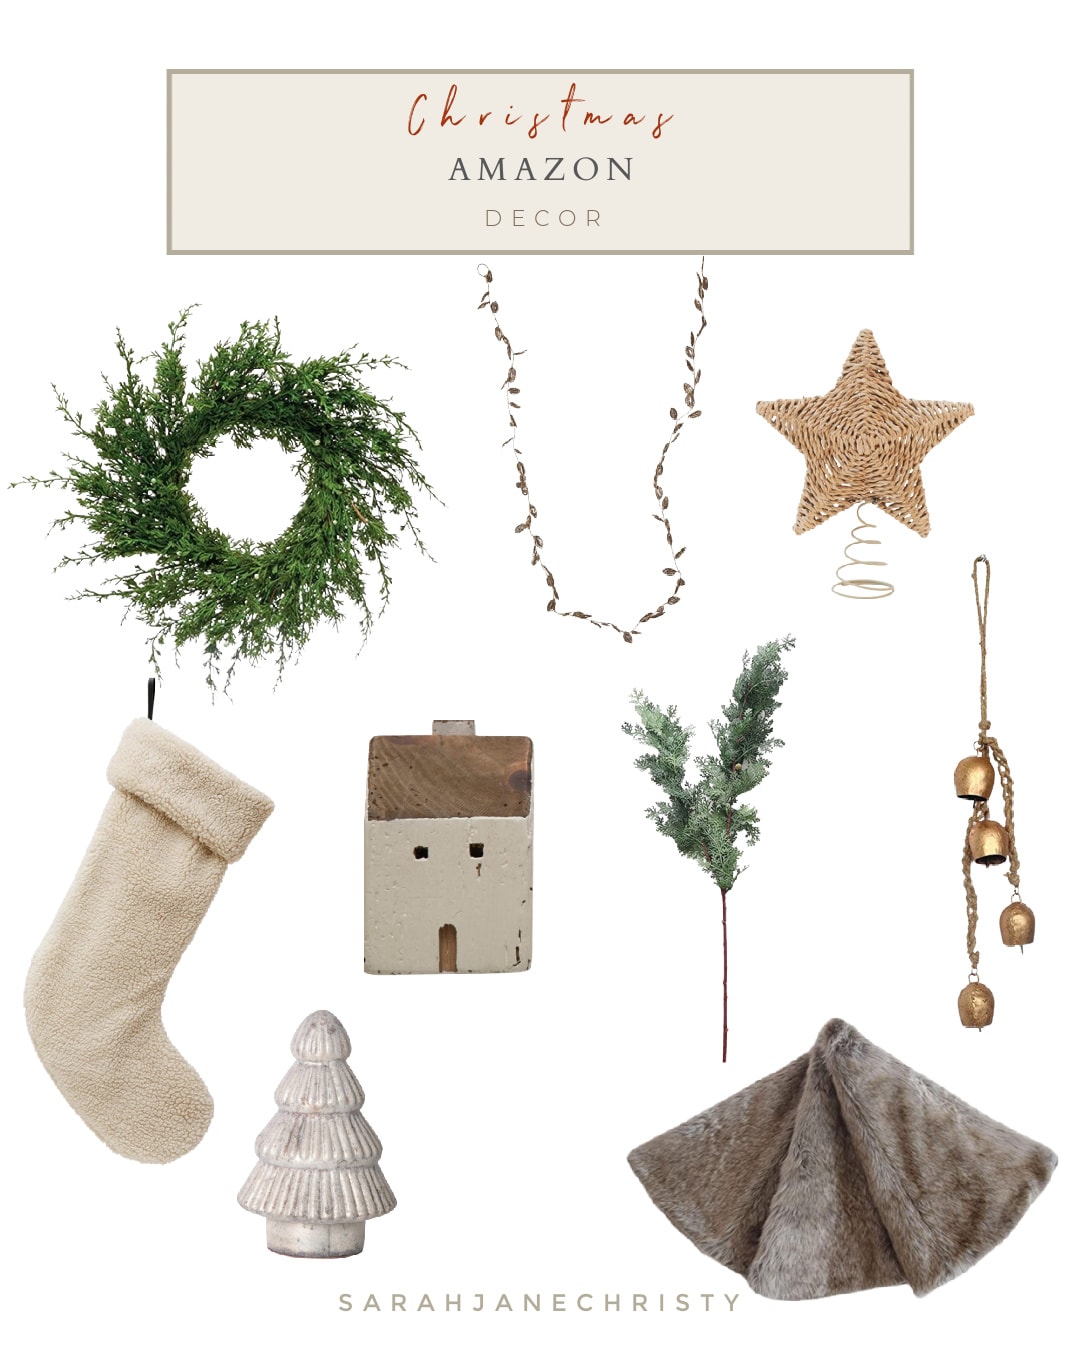 Amazon Christmas decor